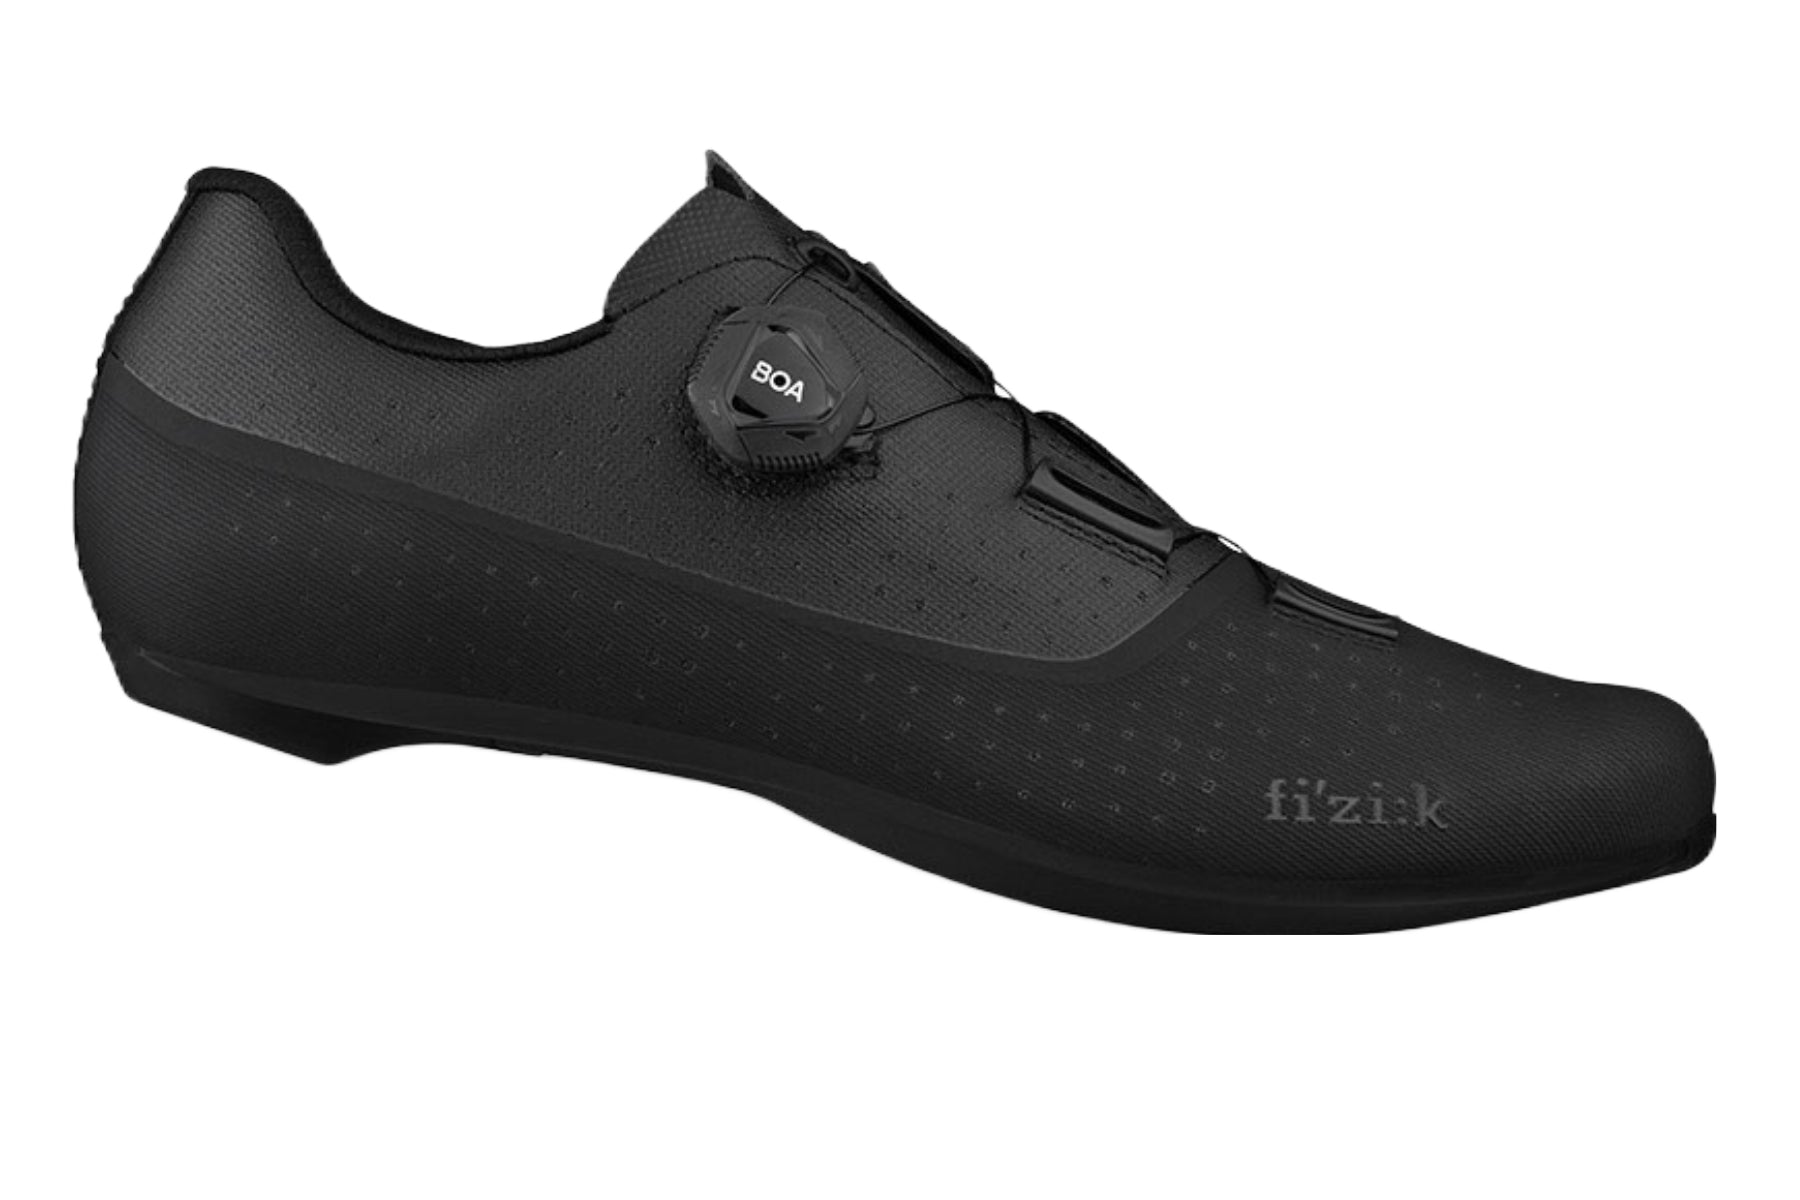 Photos - Cycling Shoes Fizik Tempo Overcurve R4 Road Shoes - Black - 47 TPR4OXR1K1010-470 